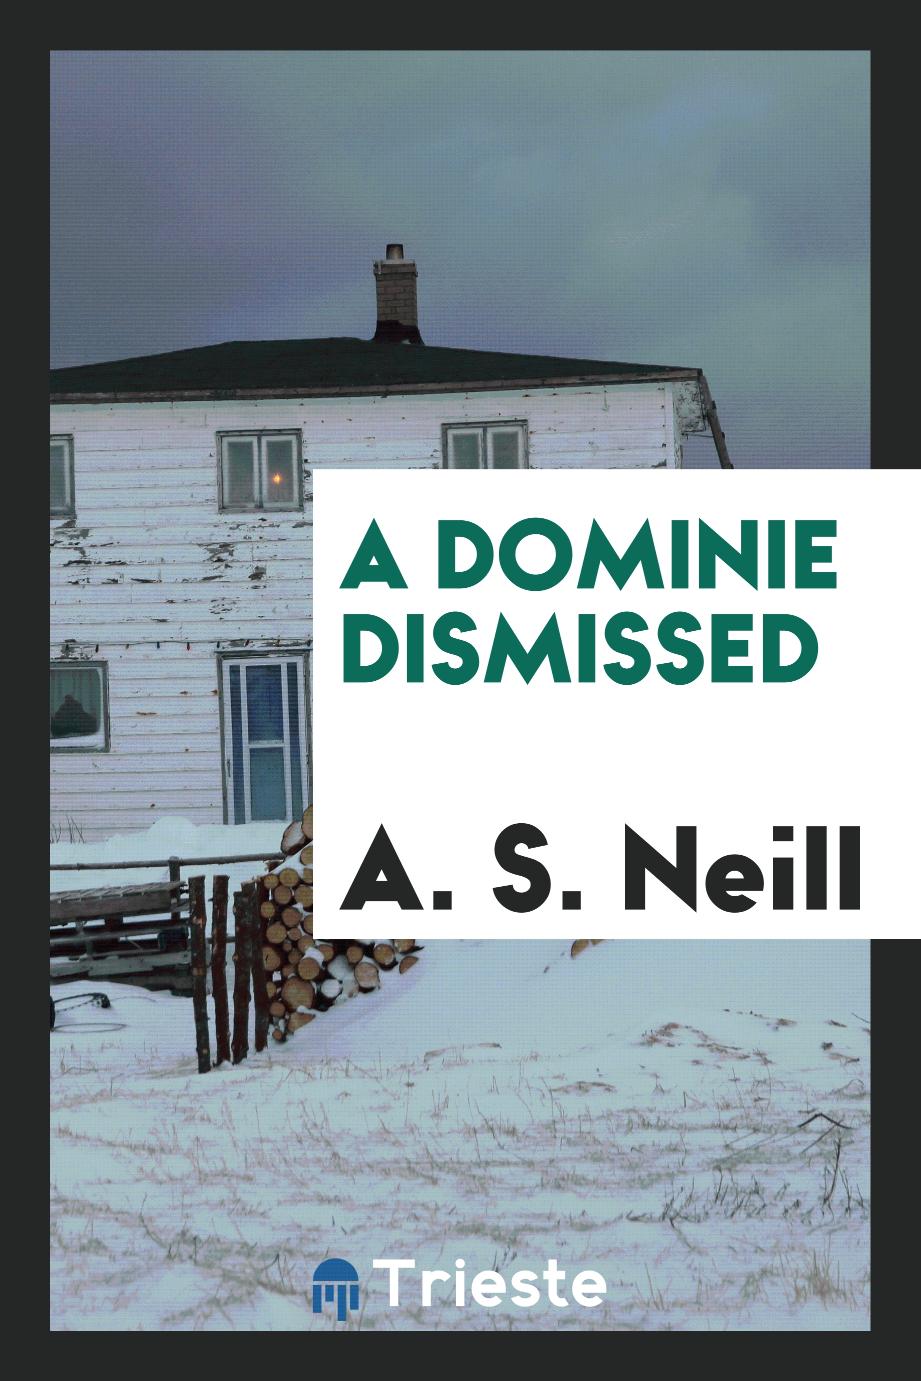 A dominie dismissed